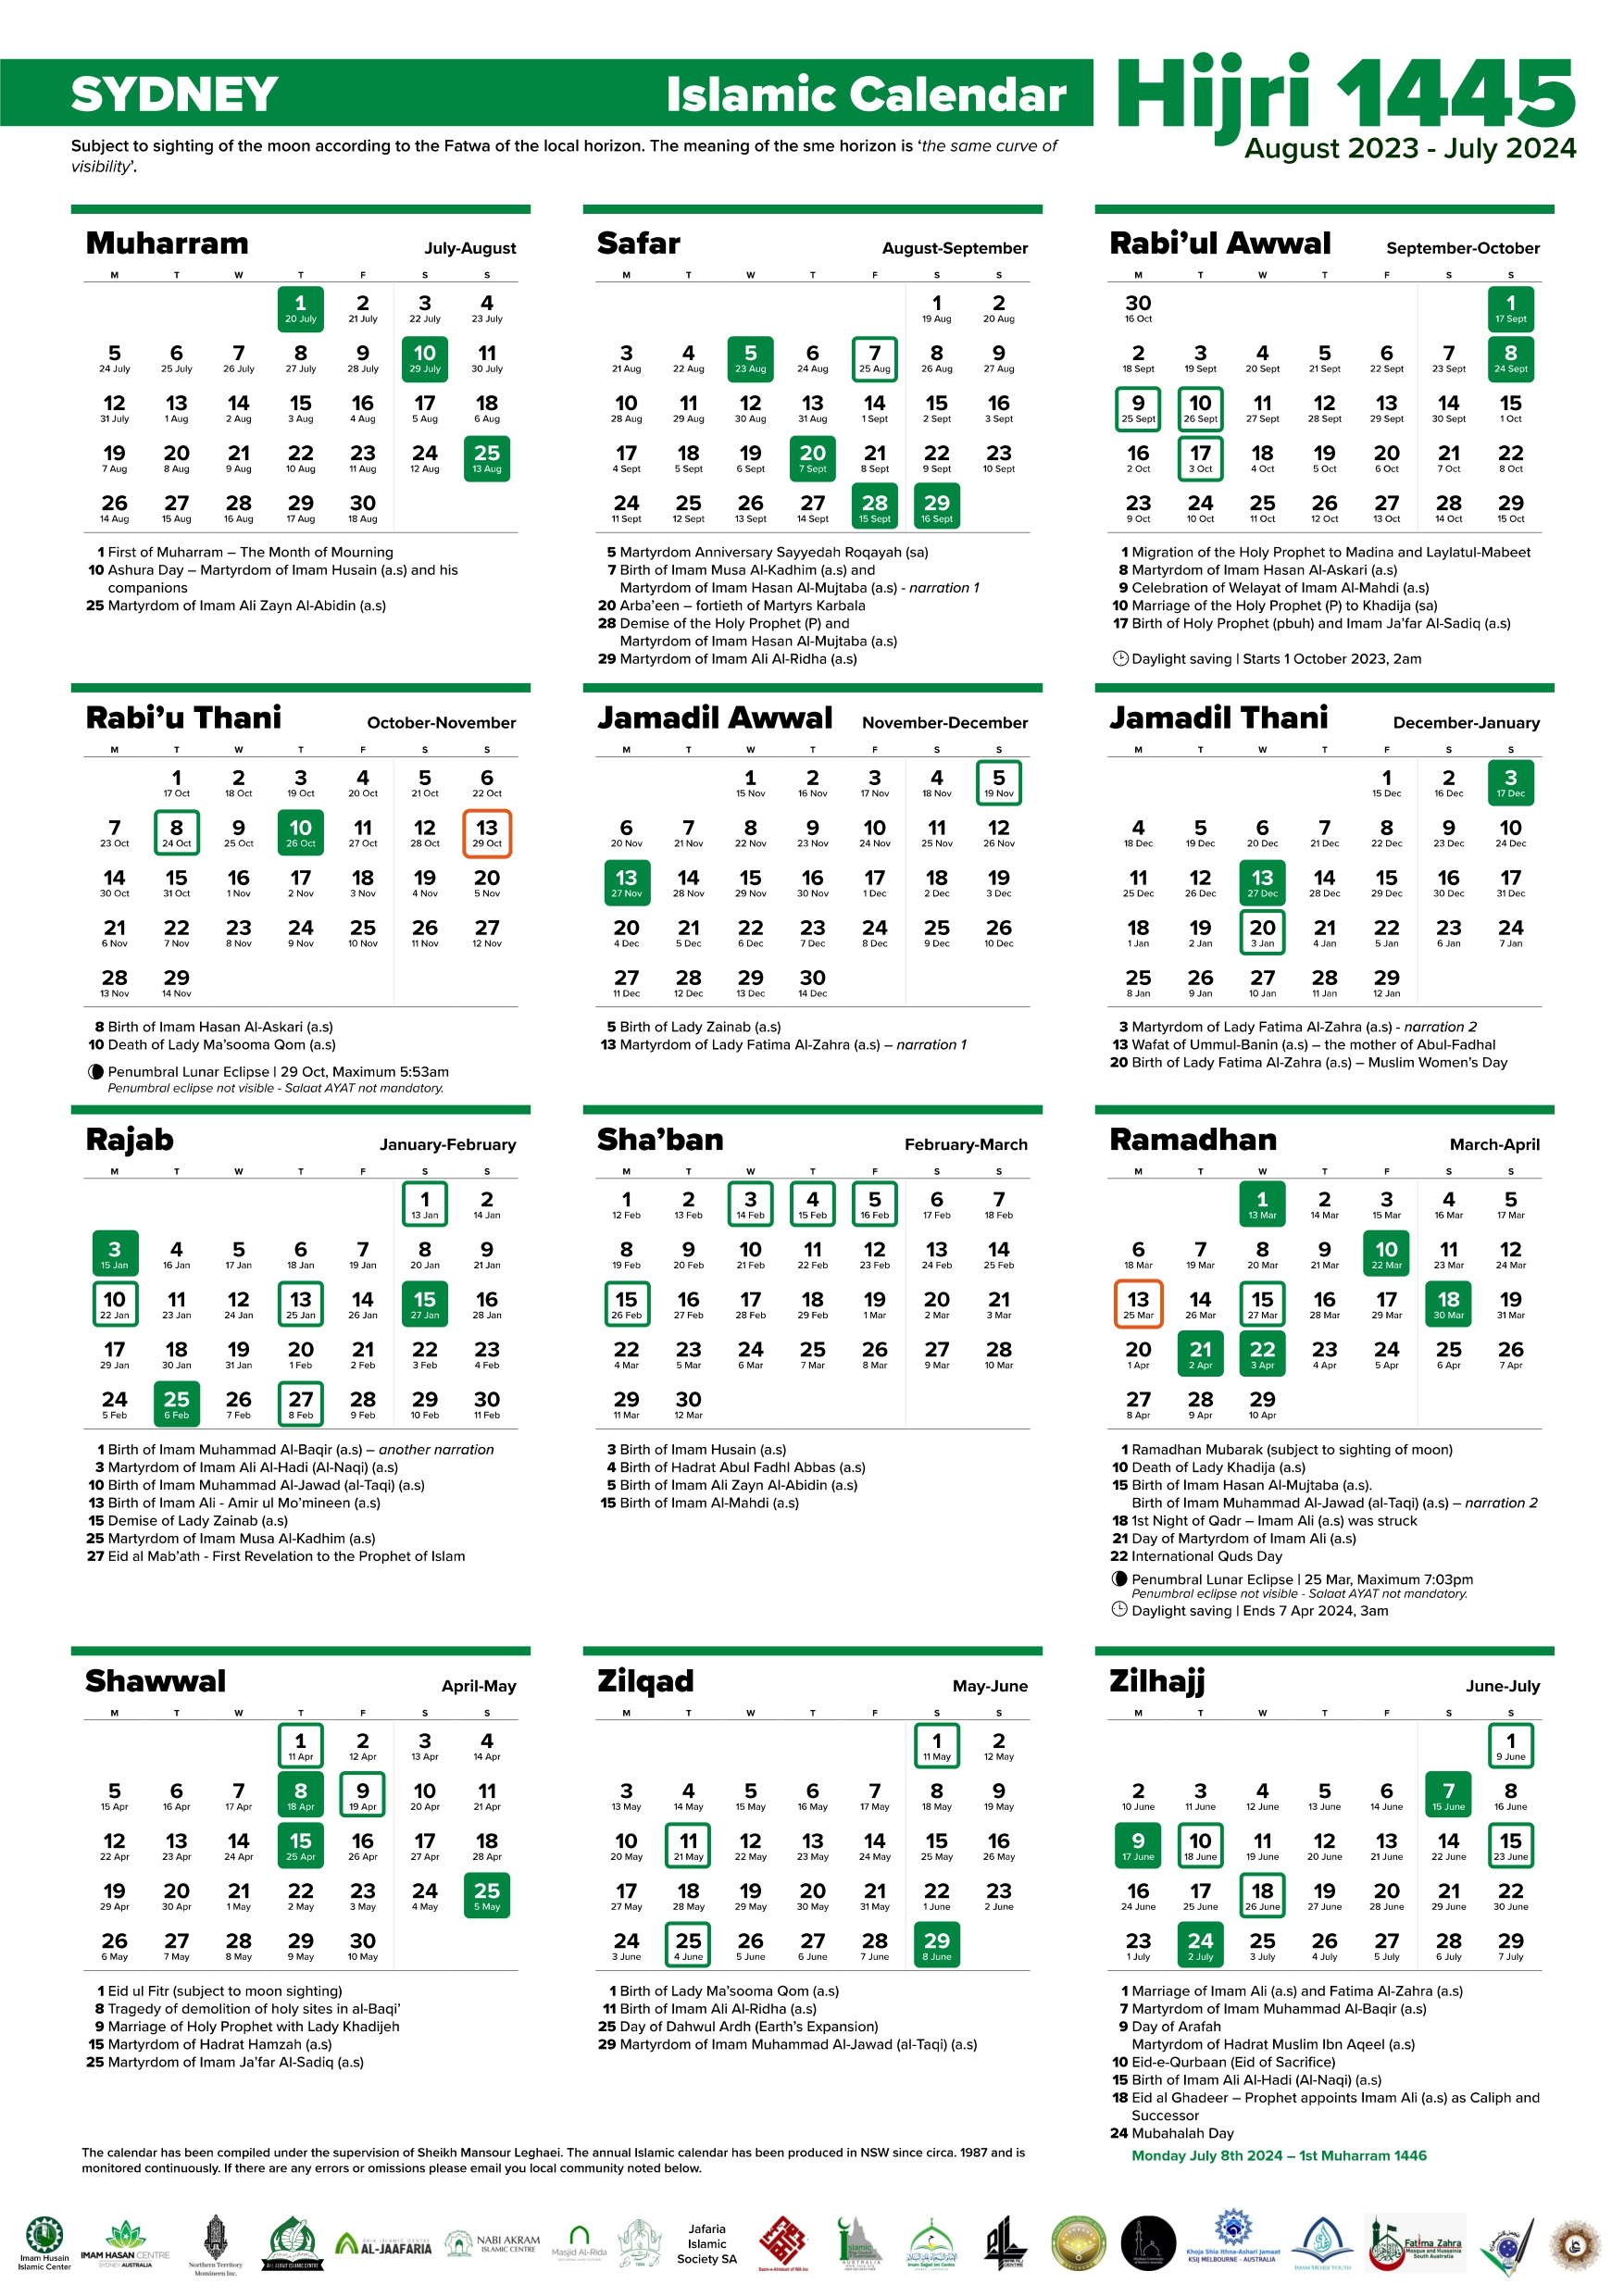 Annual Islamic Calendar 1445 Ah / 2023-2024 Ad – Imam Husain pertaining to 1 July 2024 In Islamic Calendar